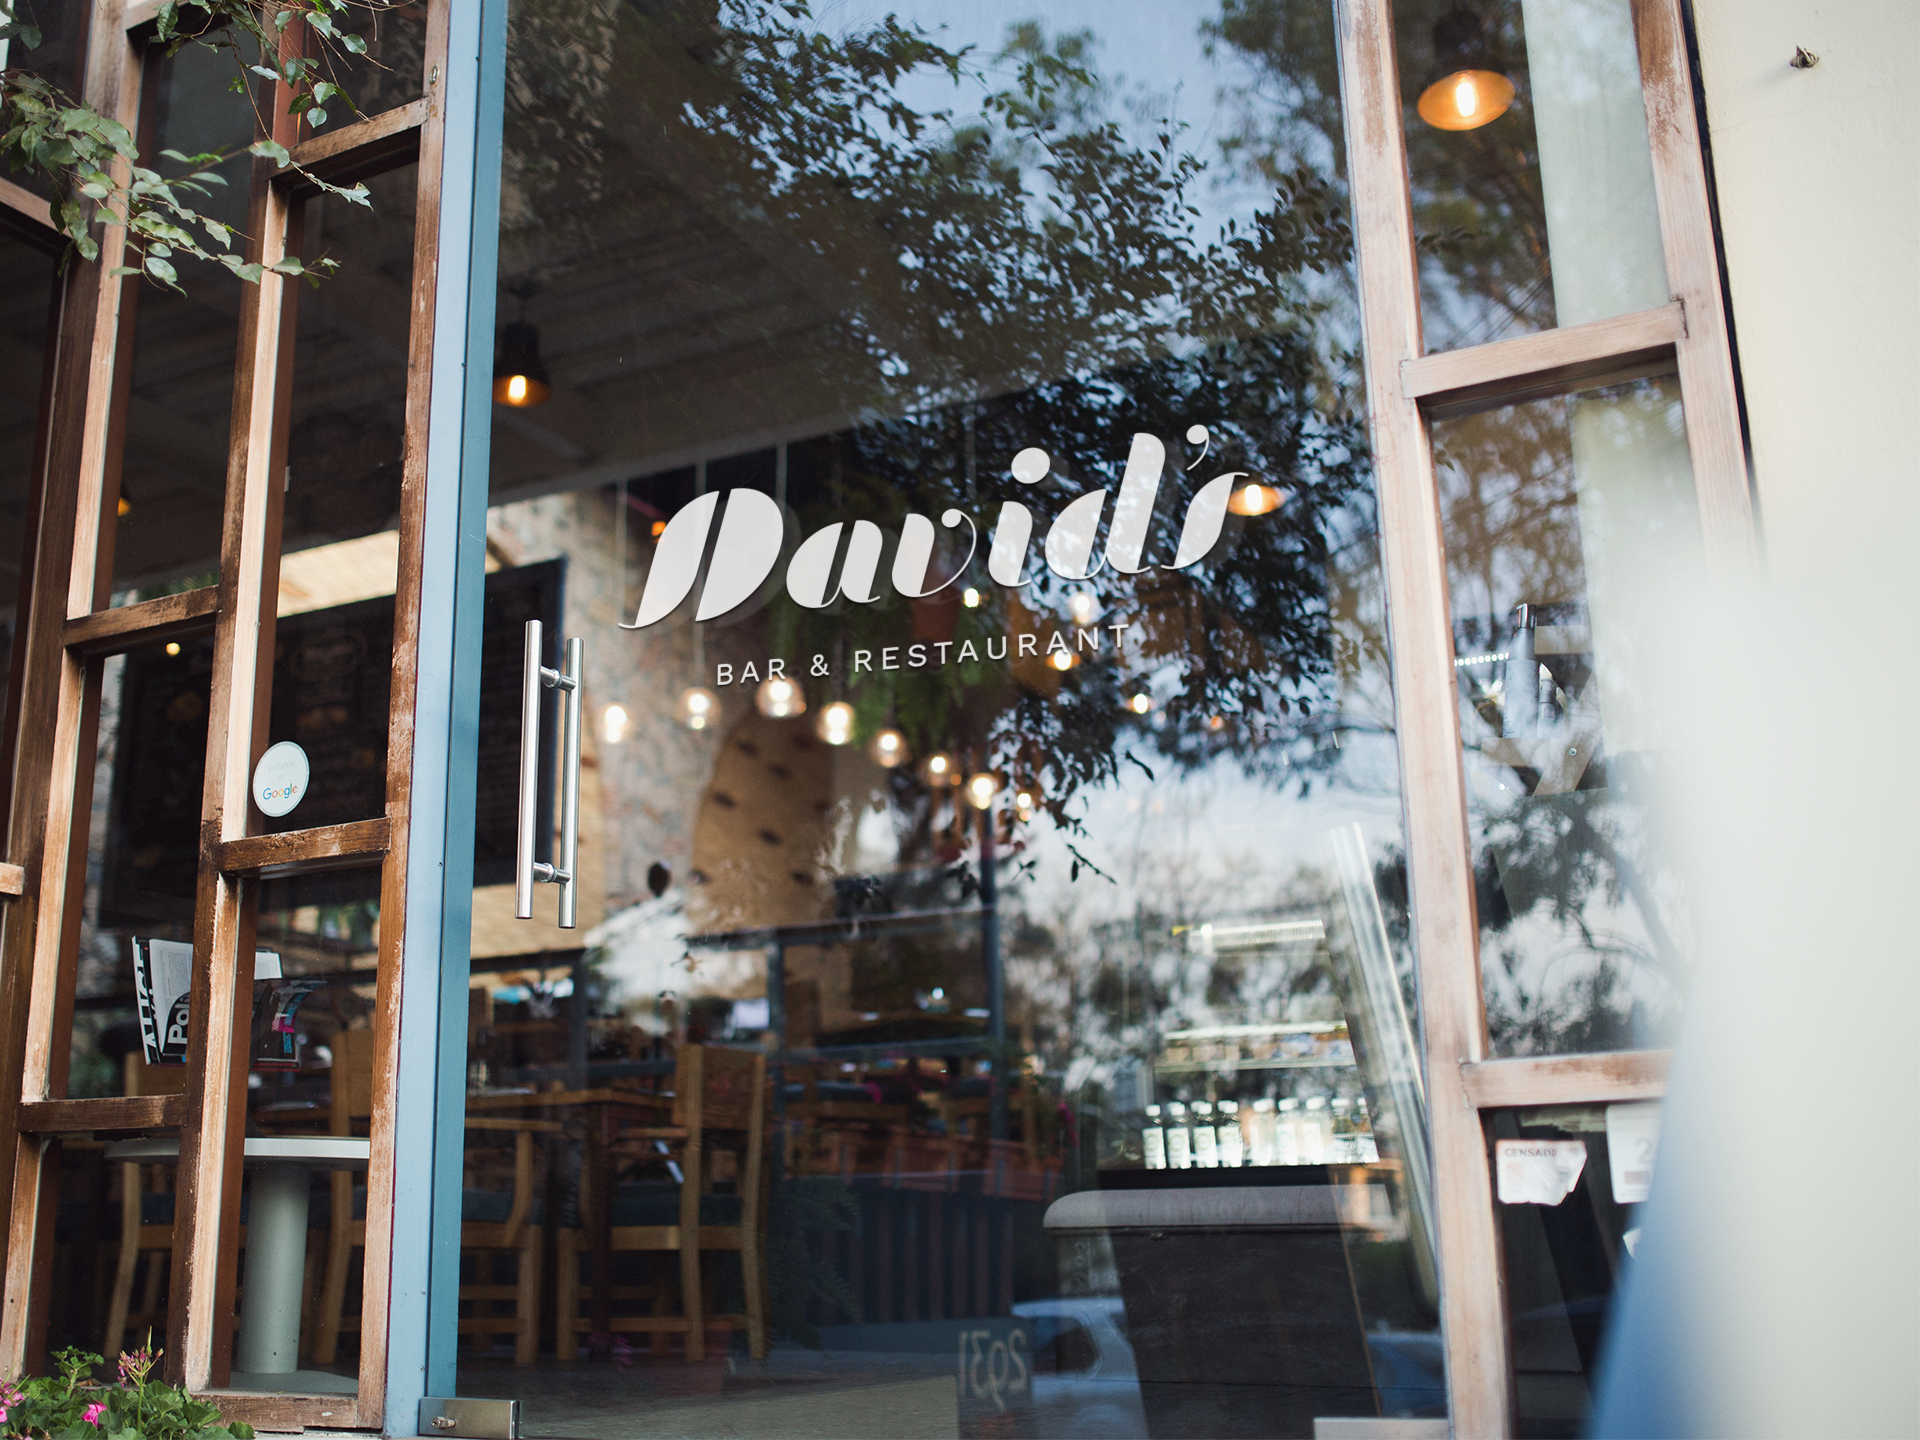 David’s Bar & Restaurant